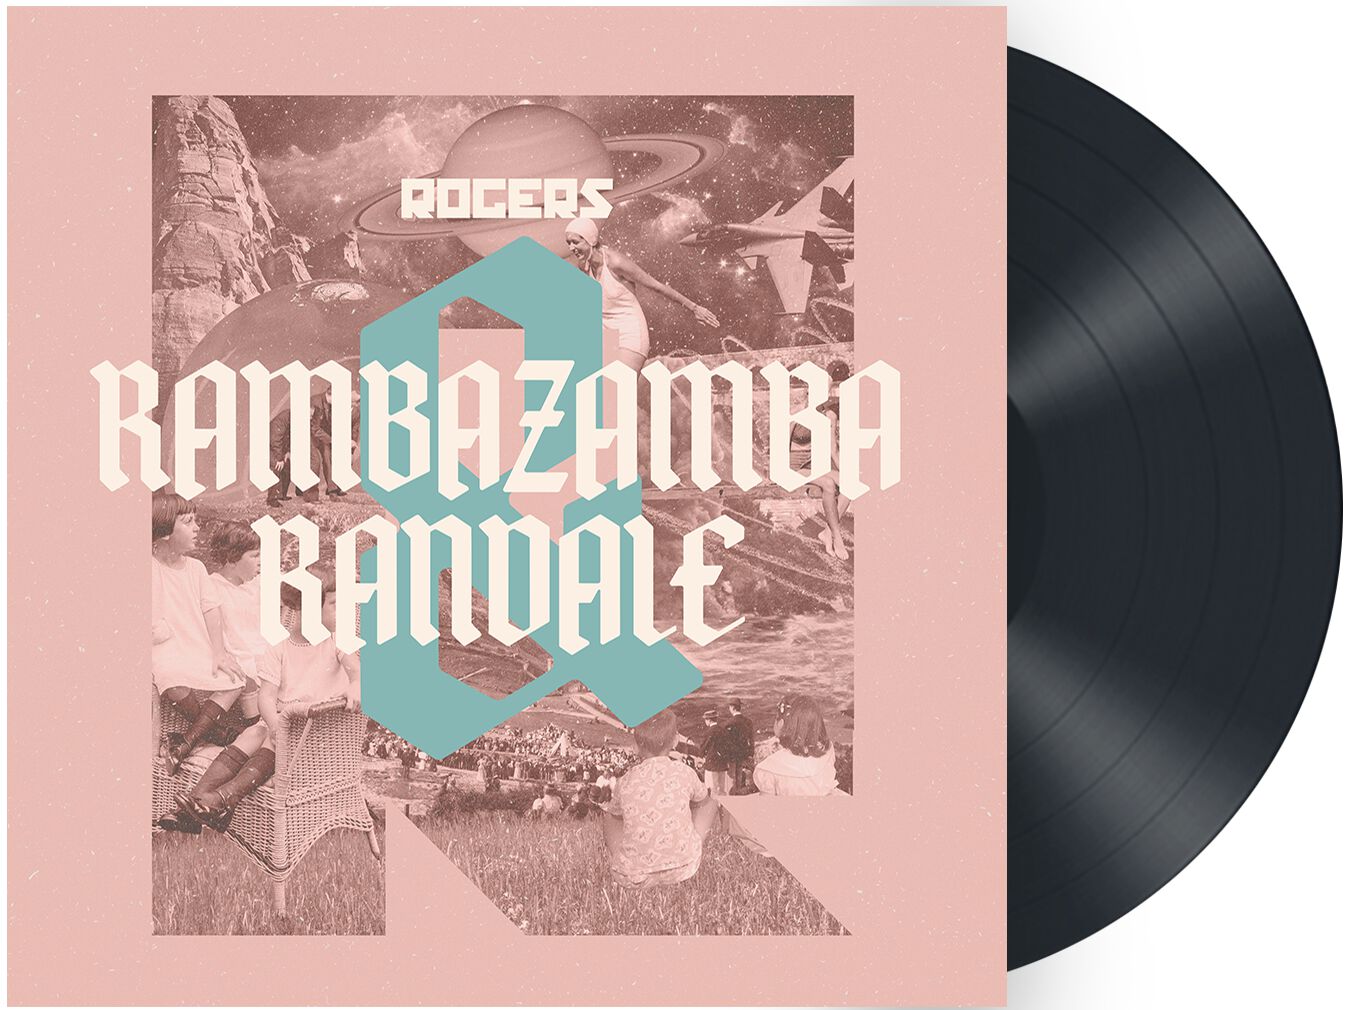 Rambazamba & Randale von Rogers - LP (Standard)